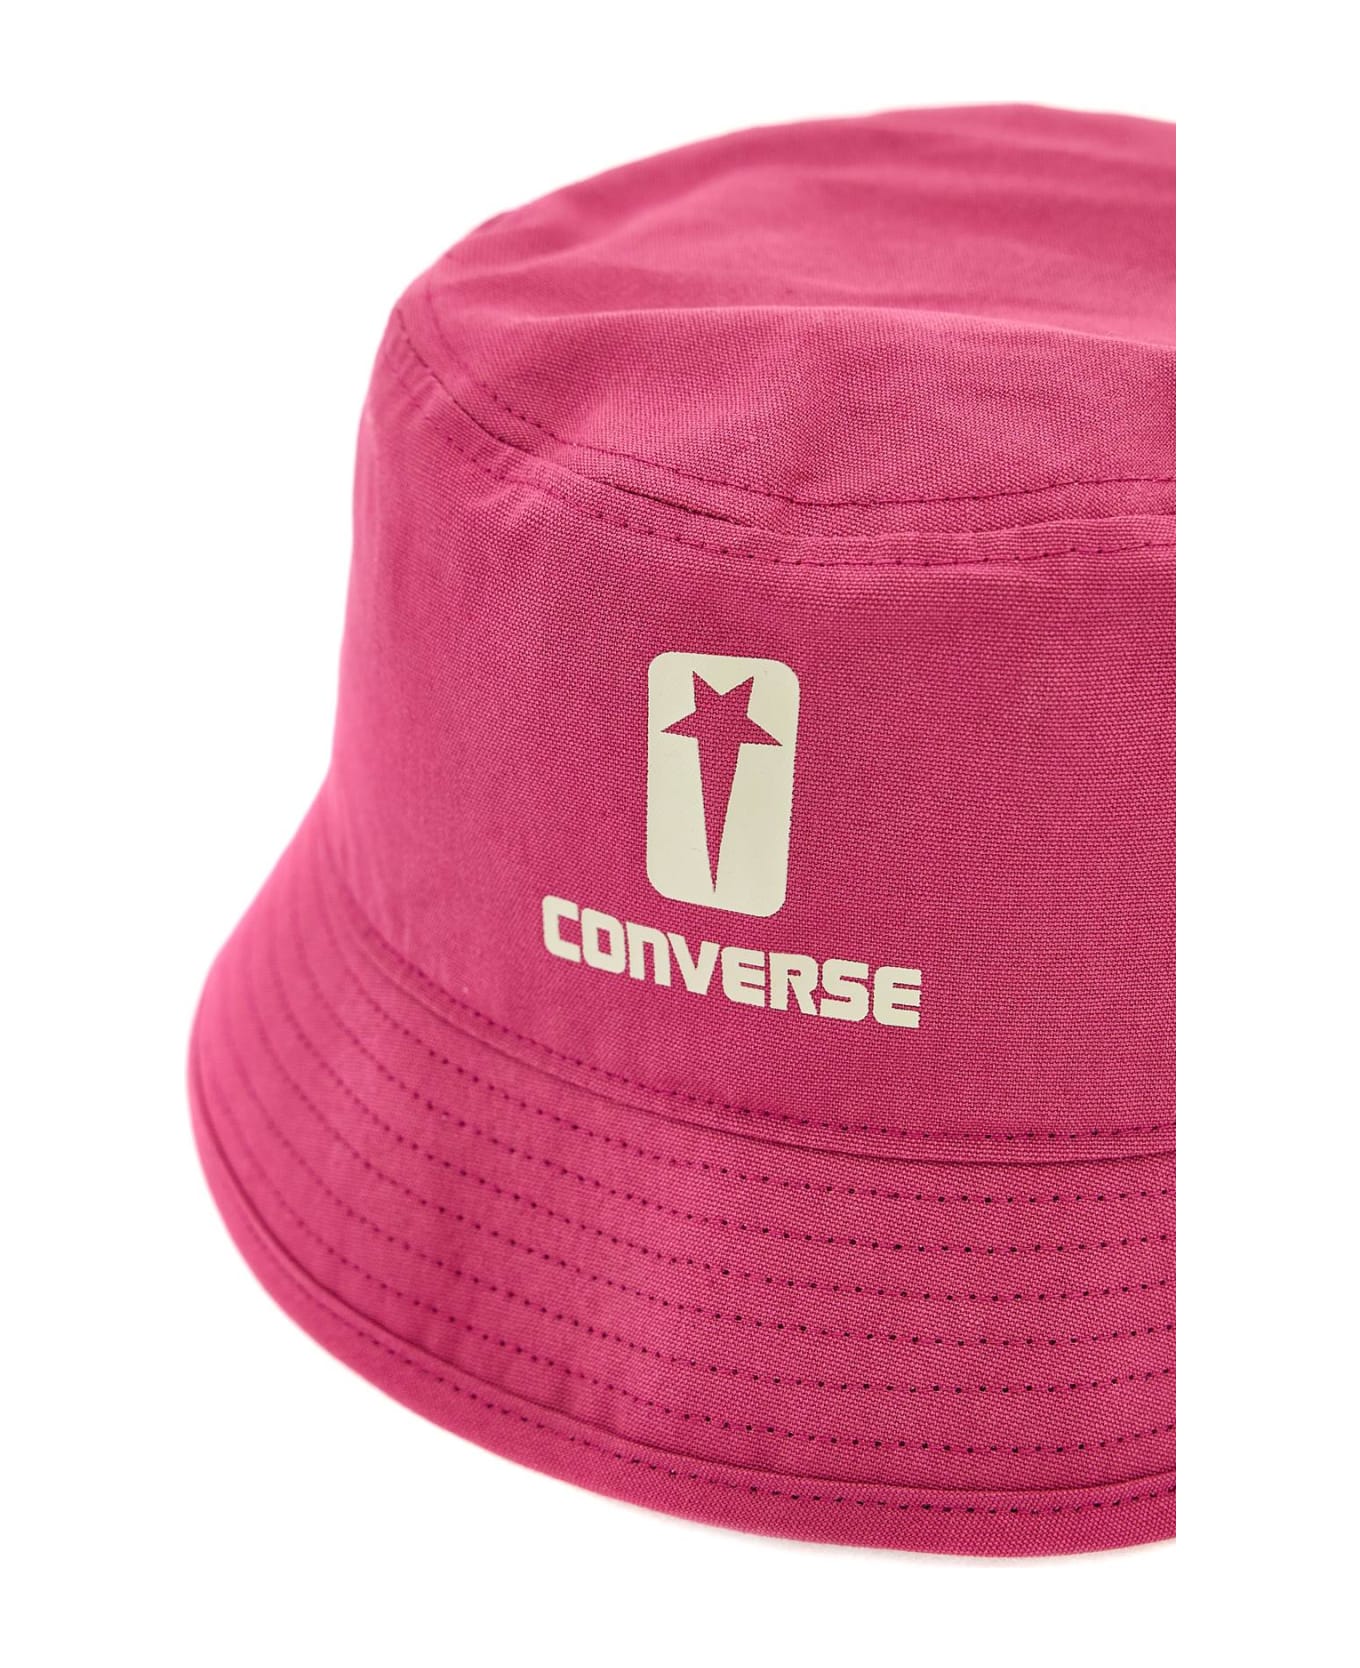 DRKSHDW Drkshw X Converse Bucket Hat - HOT PINK (Fuchsia)